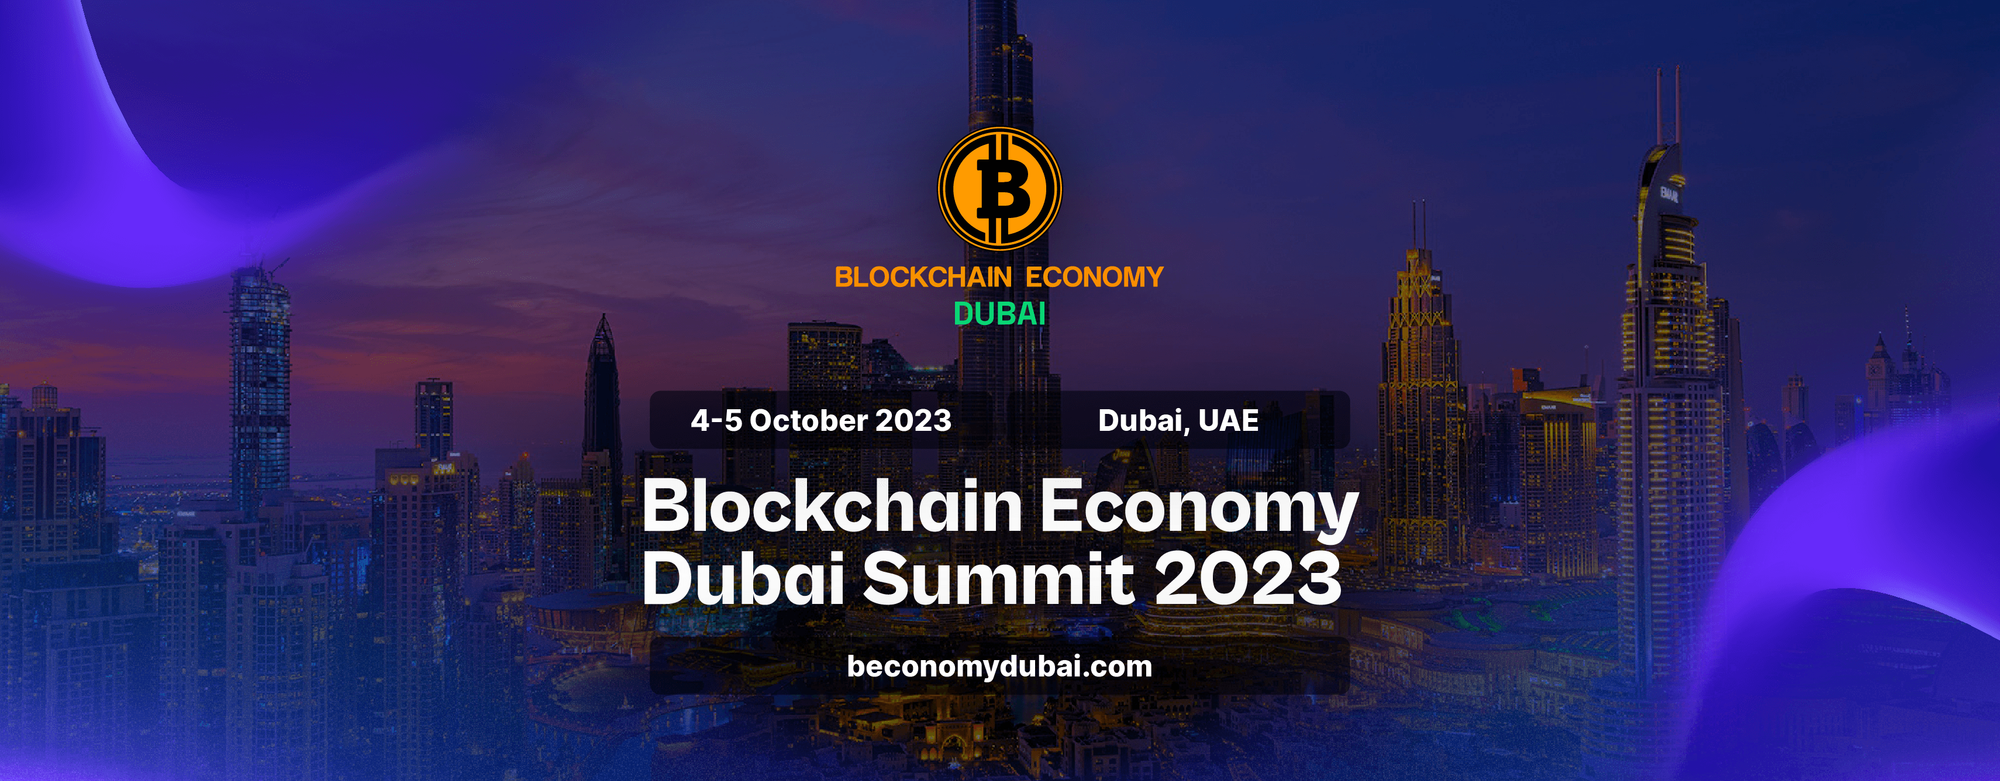 Blockchain Economy Dubai Summit- October 4-5